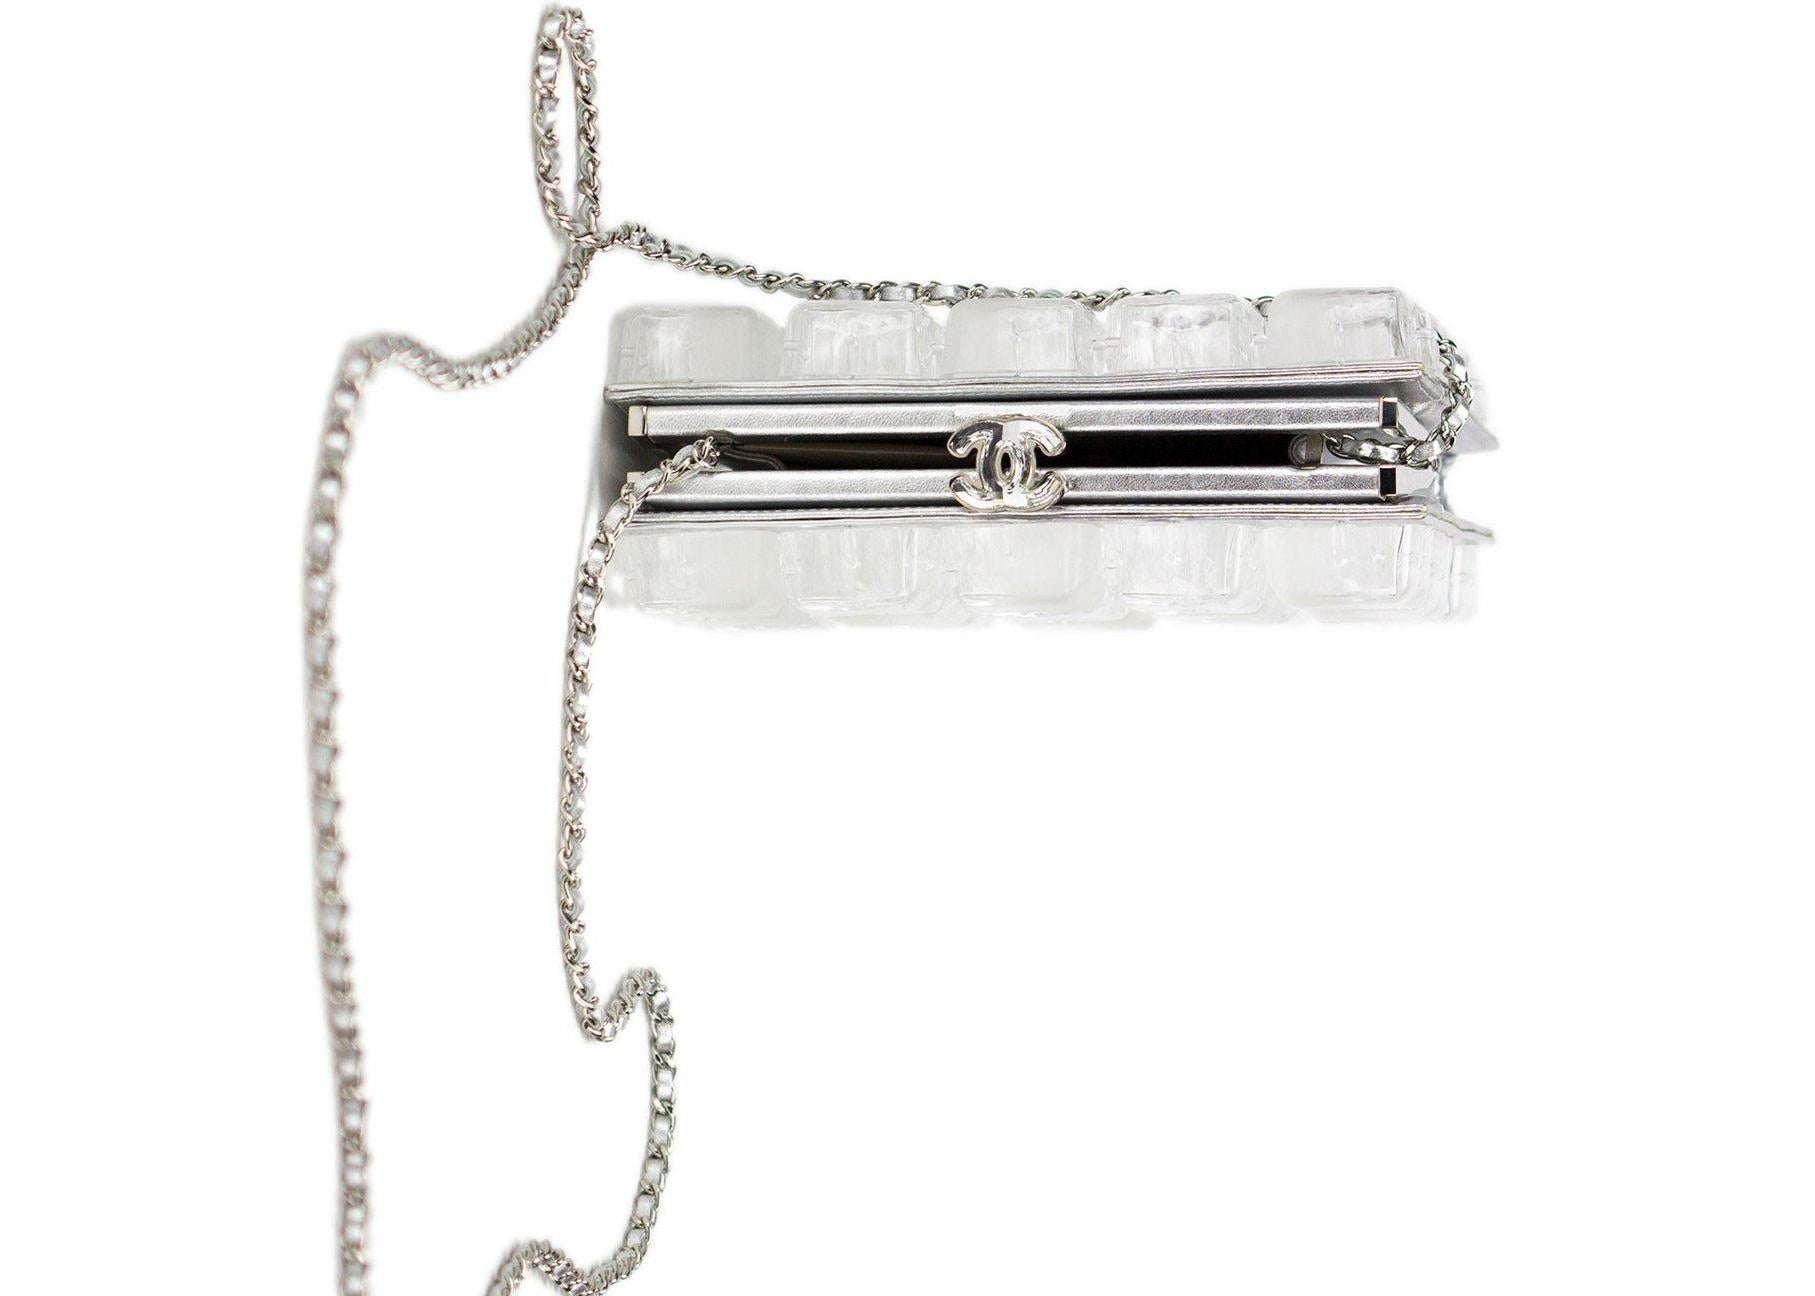 Plexiglass
Crystal
Leather 
Silver-tone hardware
Satin lining
Crystal push-lock closure
Shoulder strap drop 28